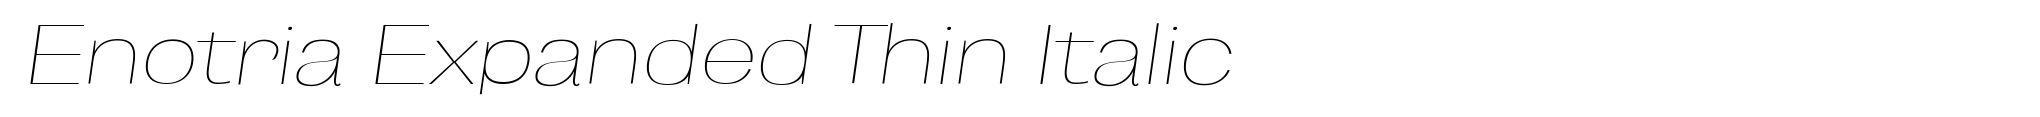 Enotria Expanded Thin Italic image